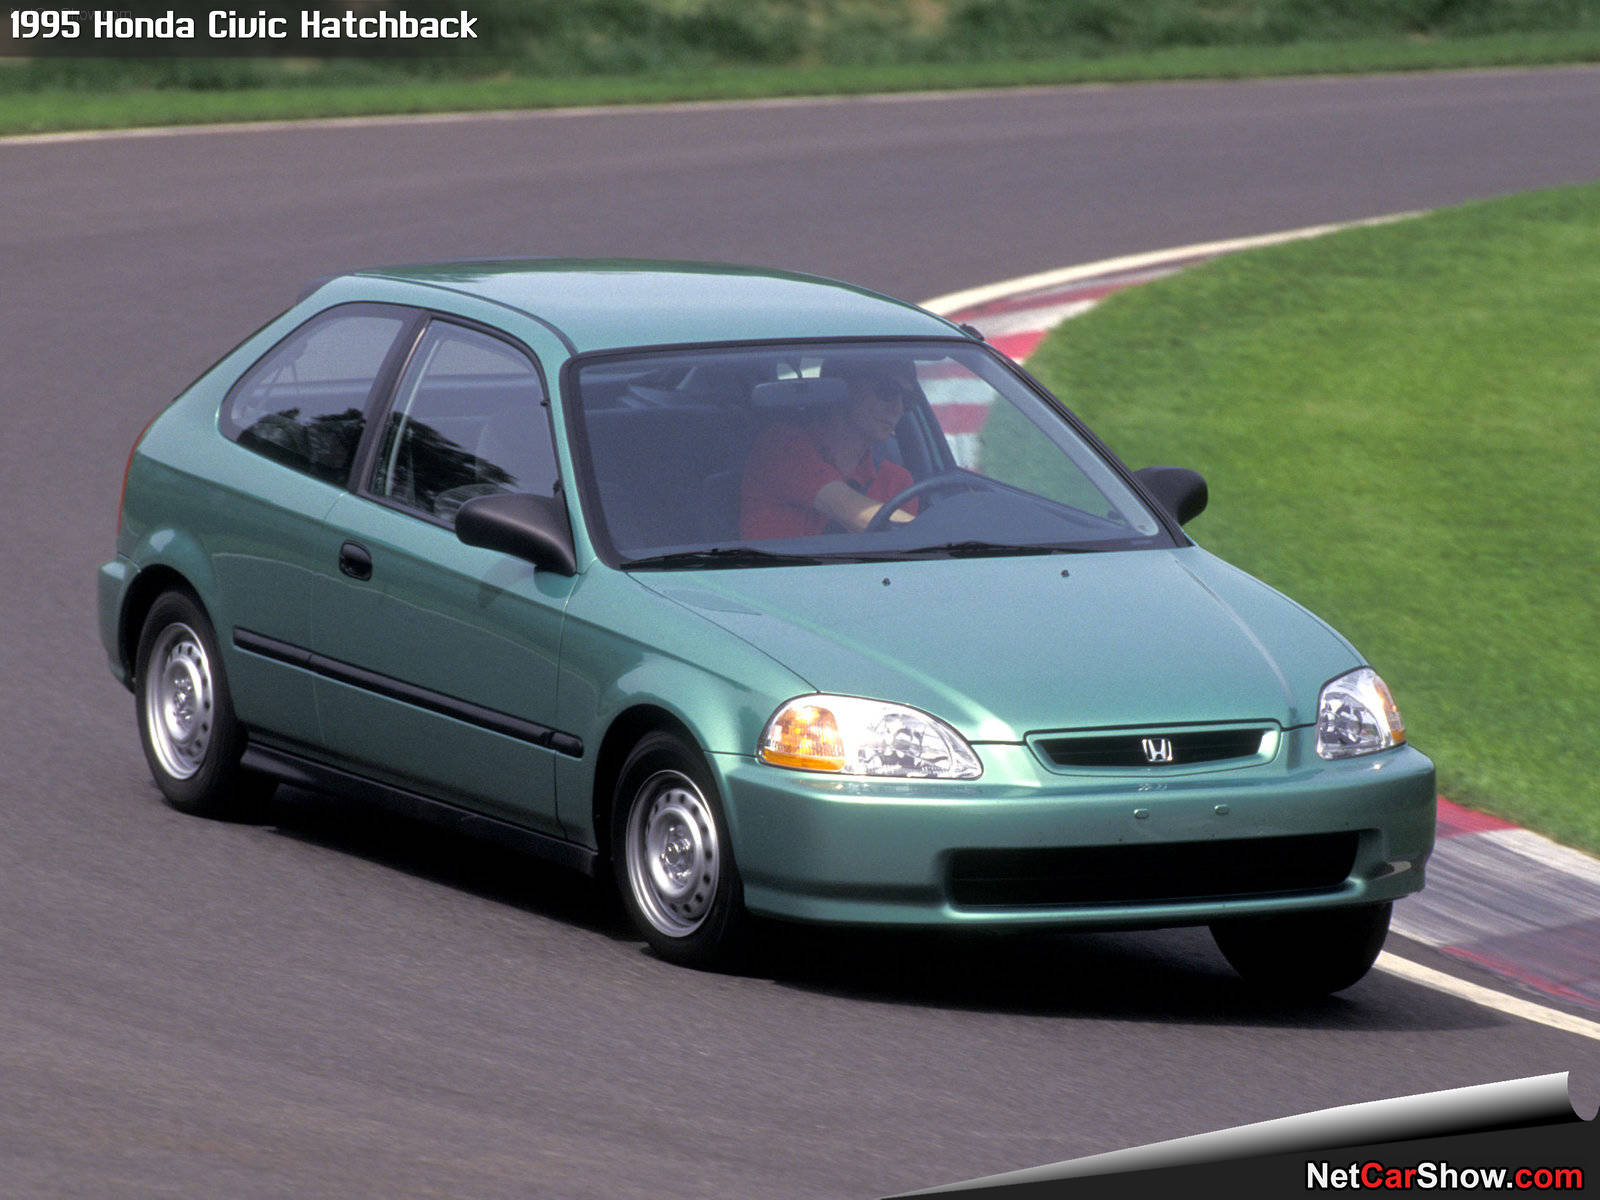 Honda-Civic_Hatchback-1995-hd.jpg